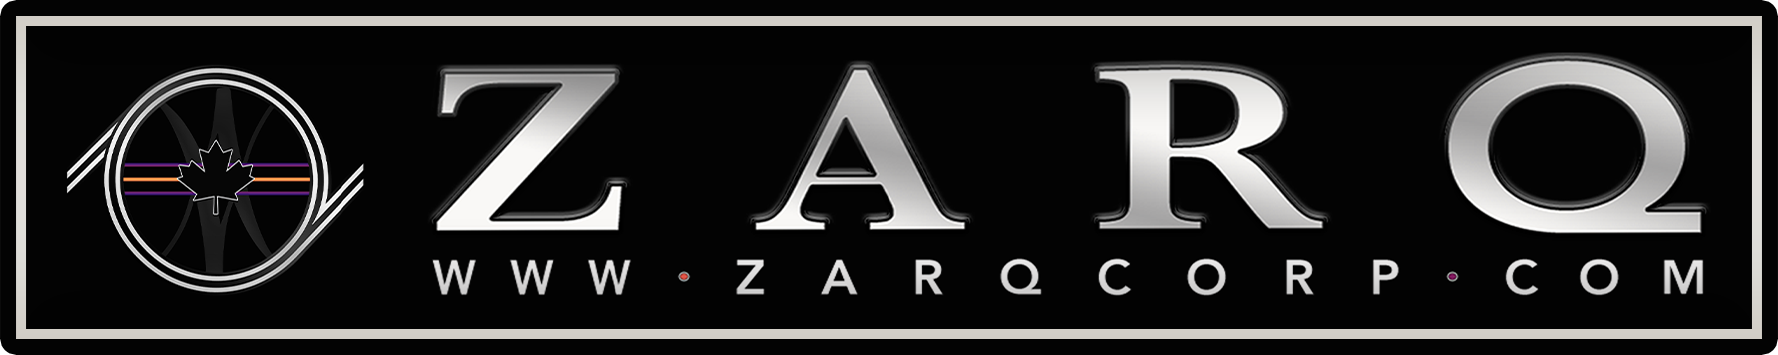 ZARQ Corp logo